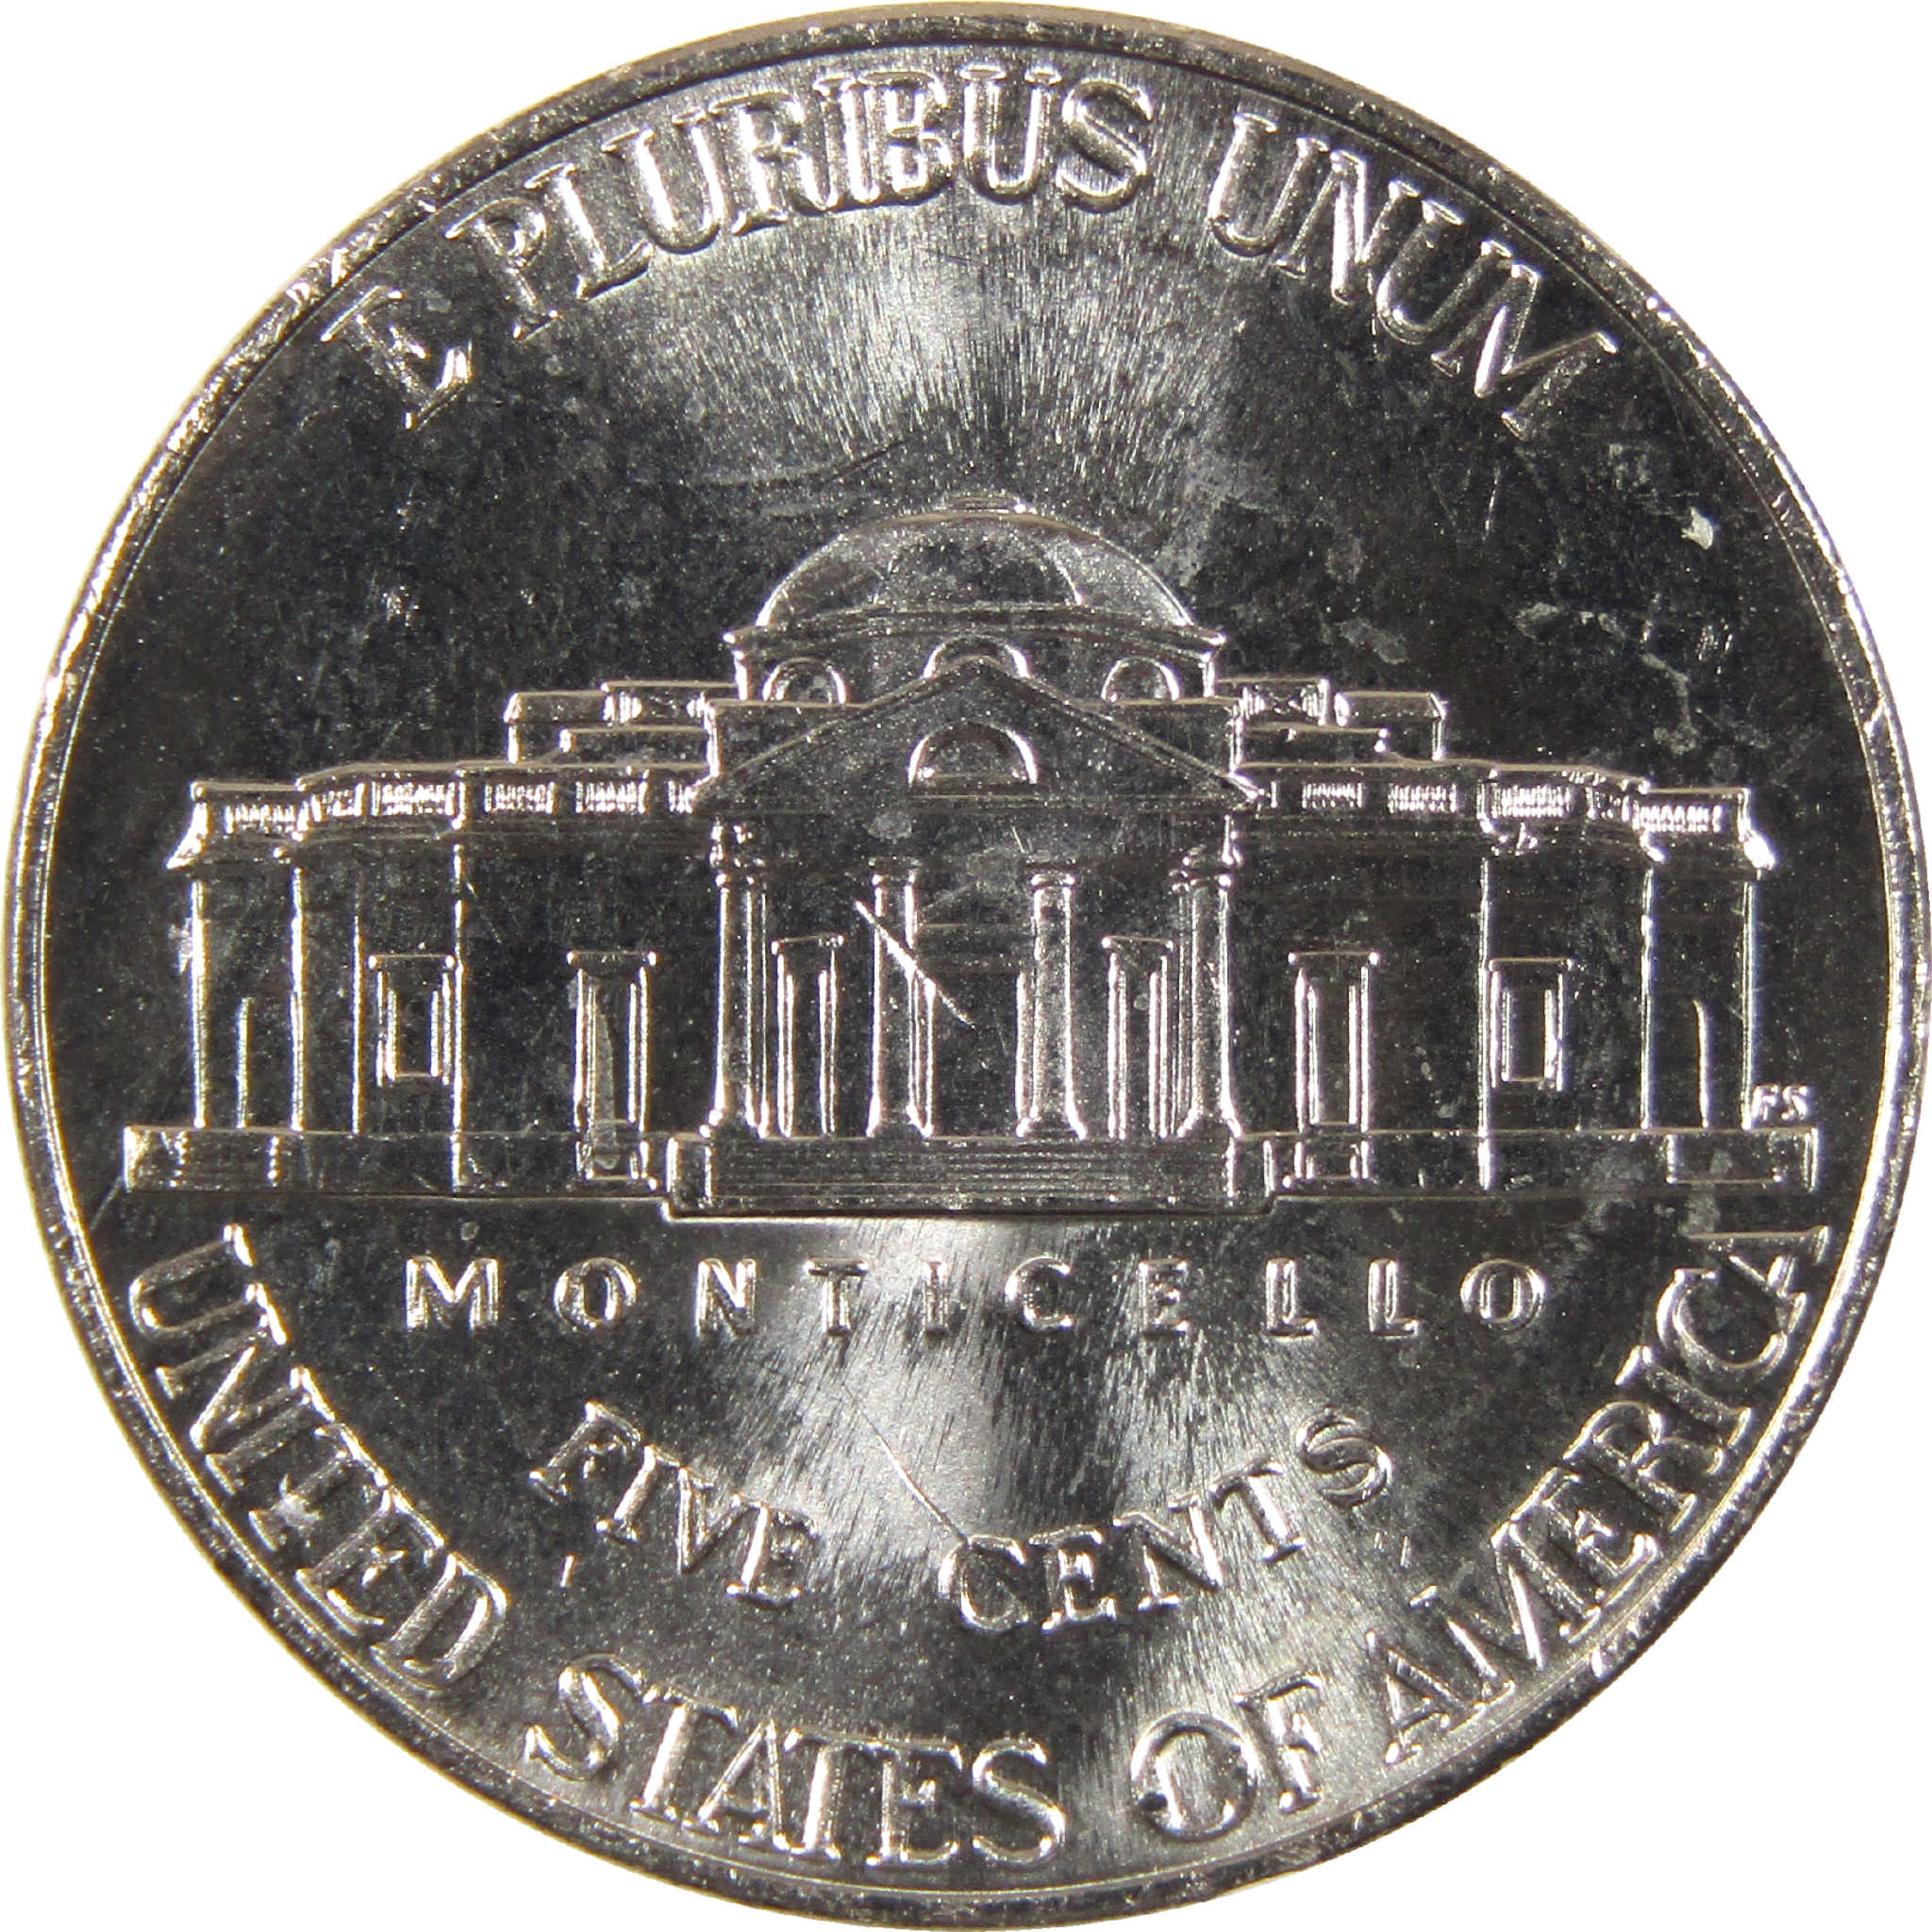 2013 D Jefferson Nickel BU Uncirculated 5c Coin